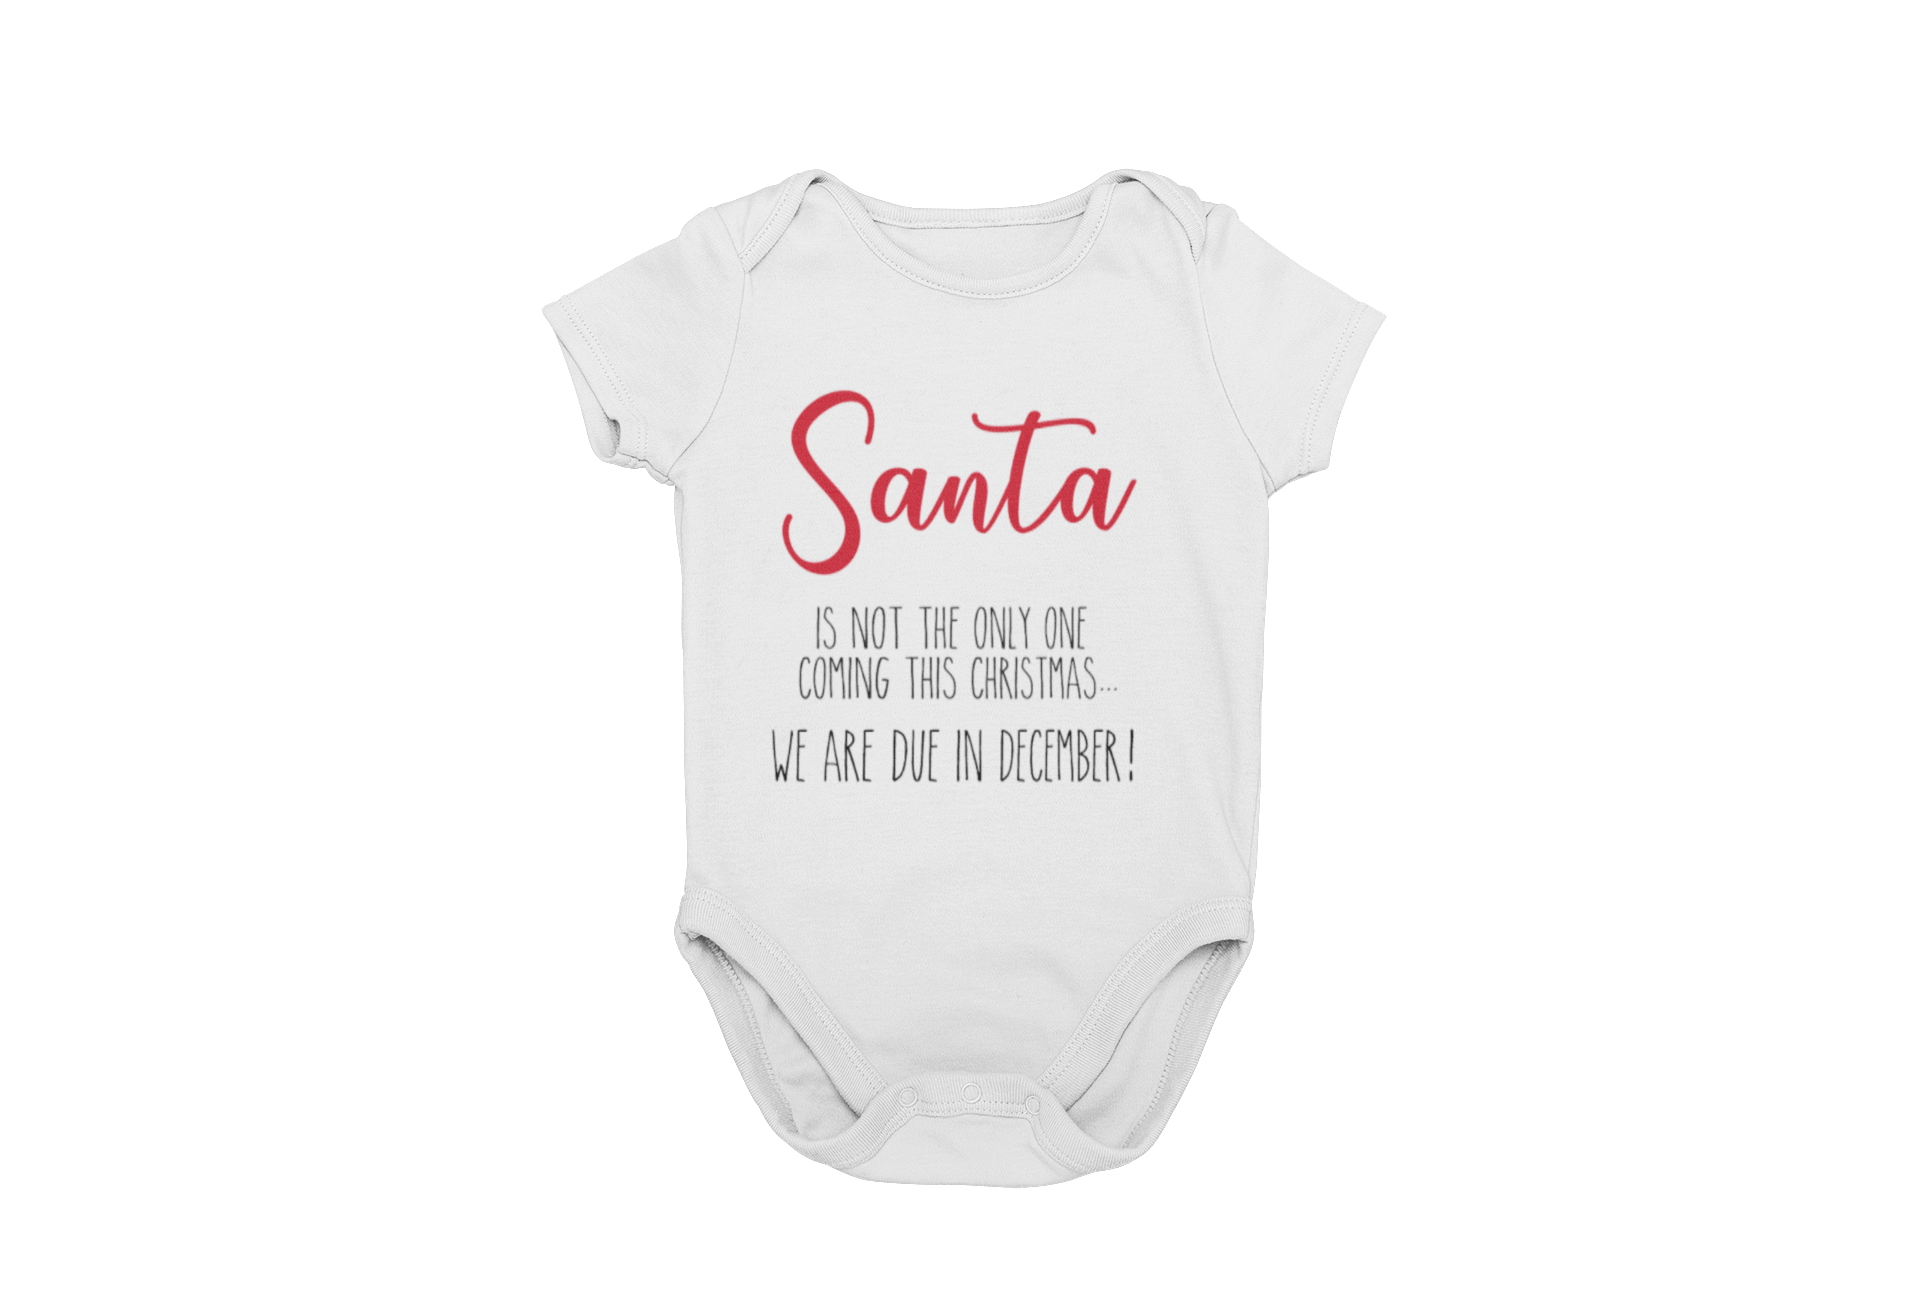 Santa Baby Baby Tee \u2022 Baby Gift x Christmas Baby's First Christmas Shirt \u2022 Minimal Graphic Tee \u2022 Santa